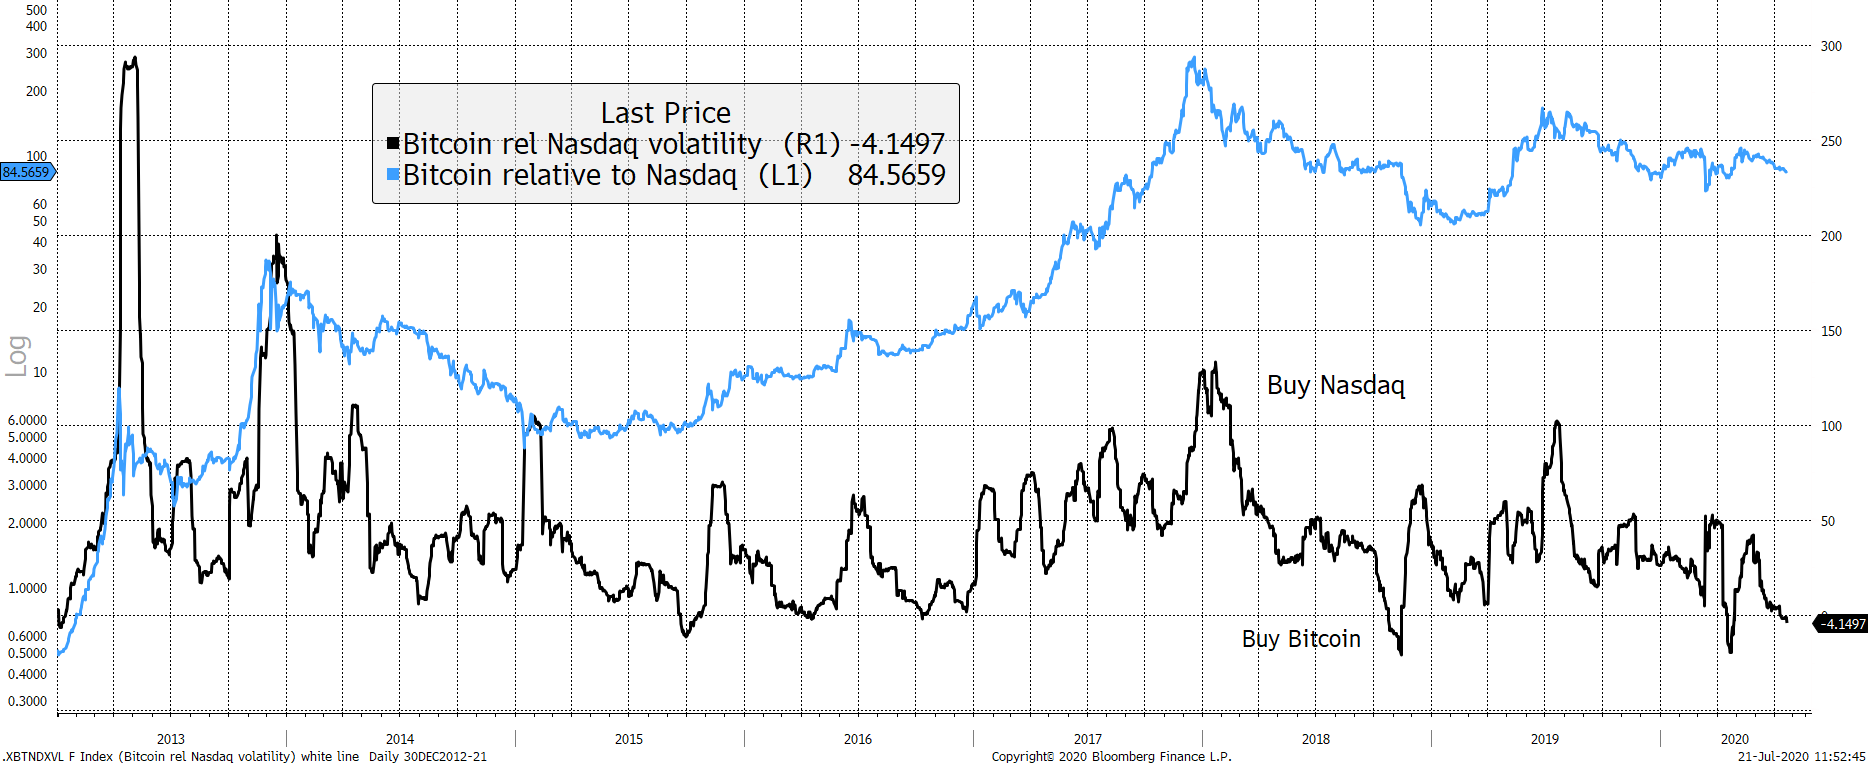 Source: Bloomberg. Bitcoin relative to Nasdaq (blue) and Bitcoin volatility less Nasdaq volatility since 2013.